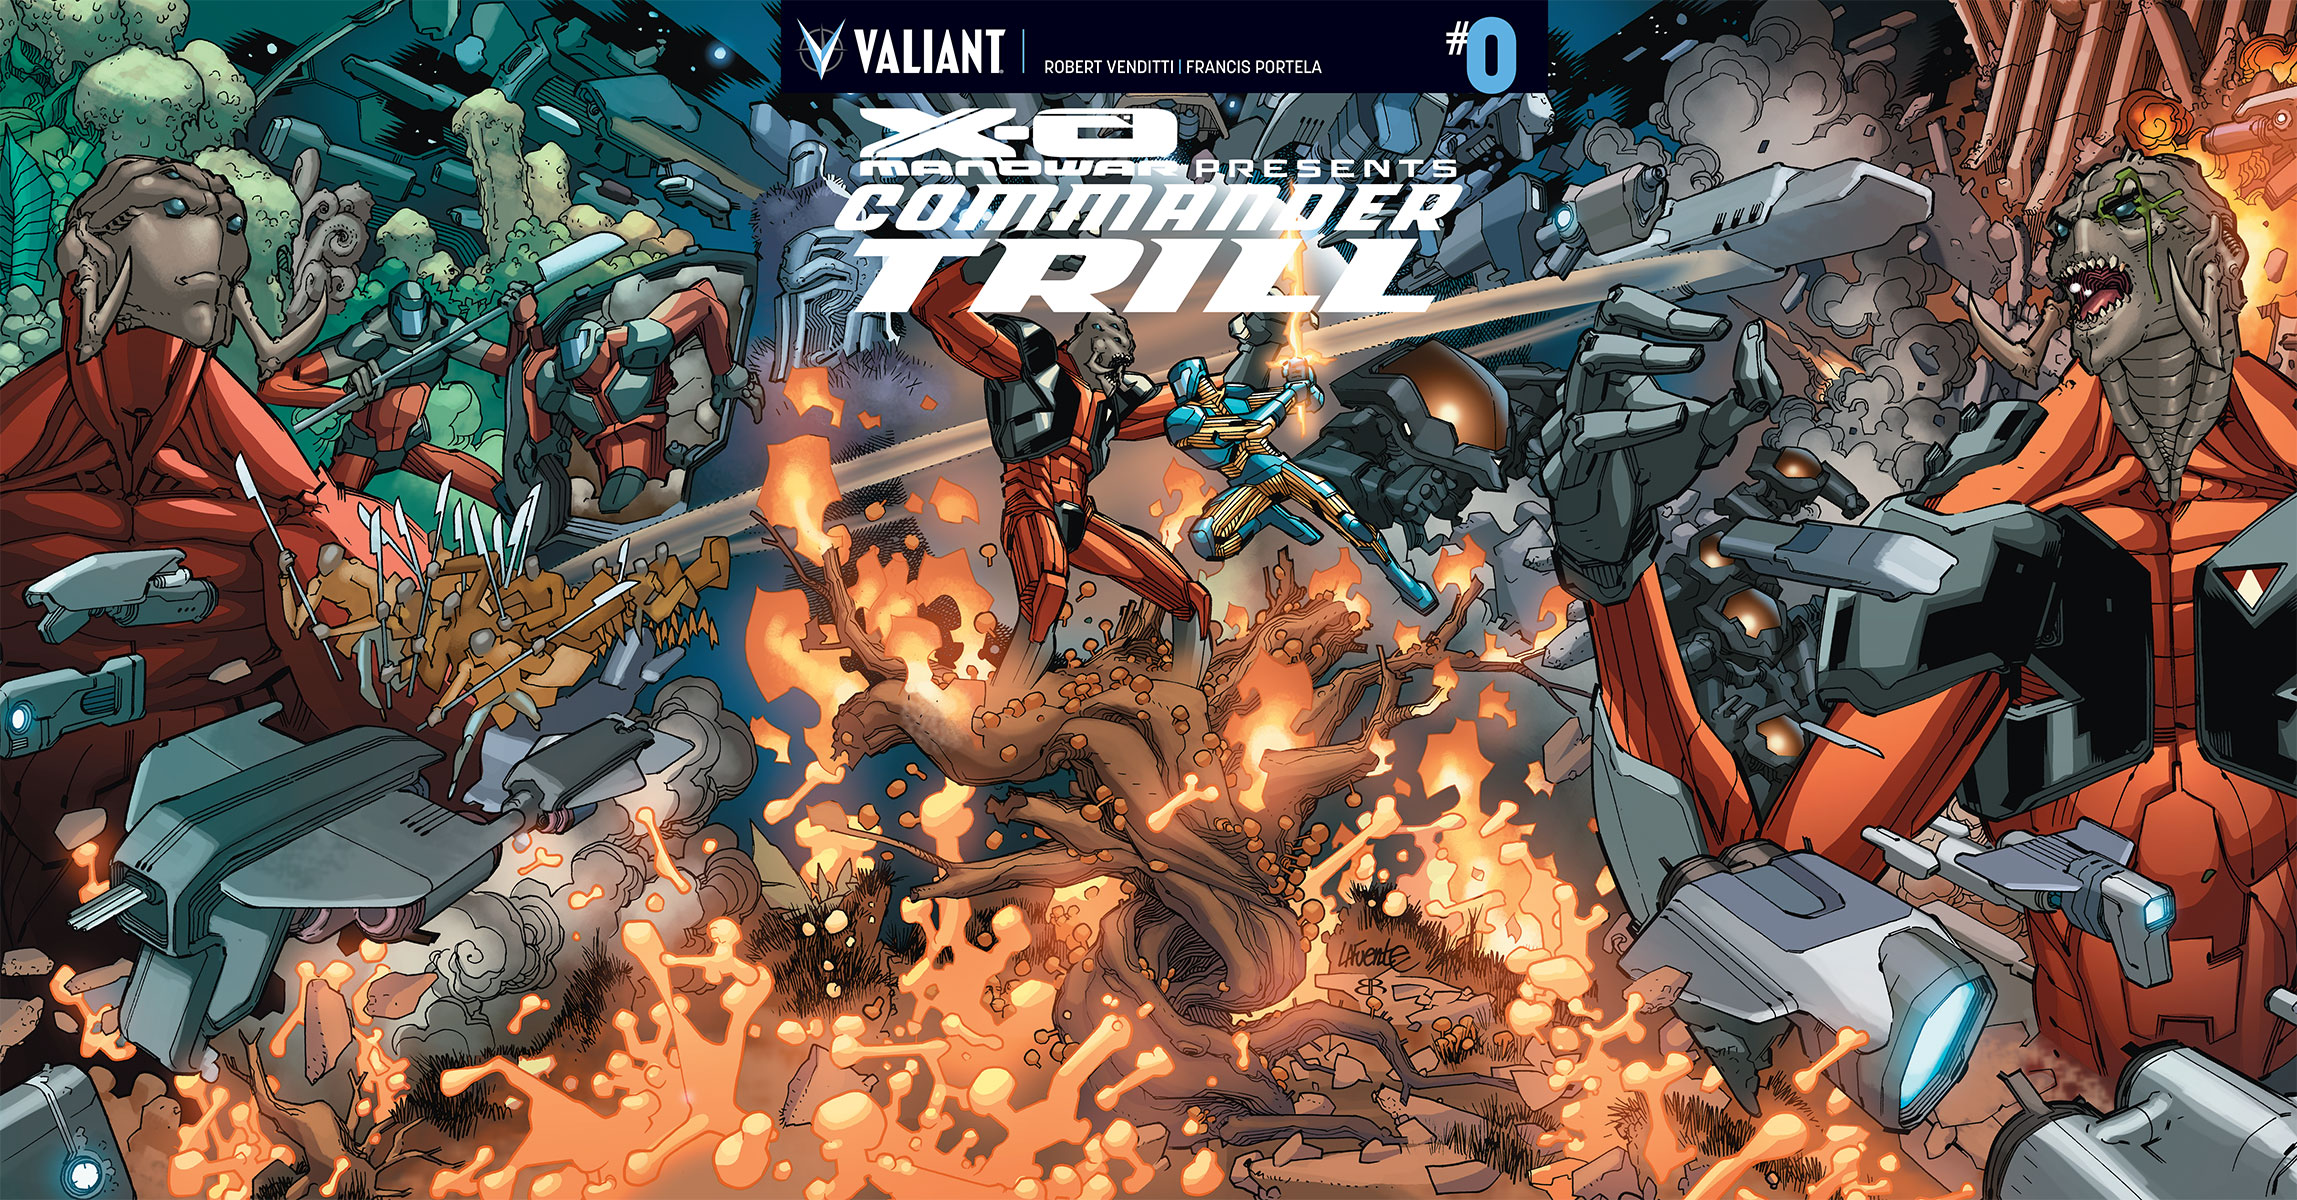 December 2nd Valiant Previews: X-O Manowar: Commander Trill #0 - NerdSpan2297 x 1200